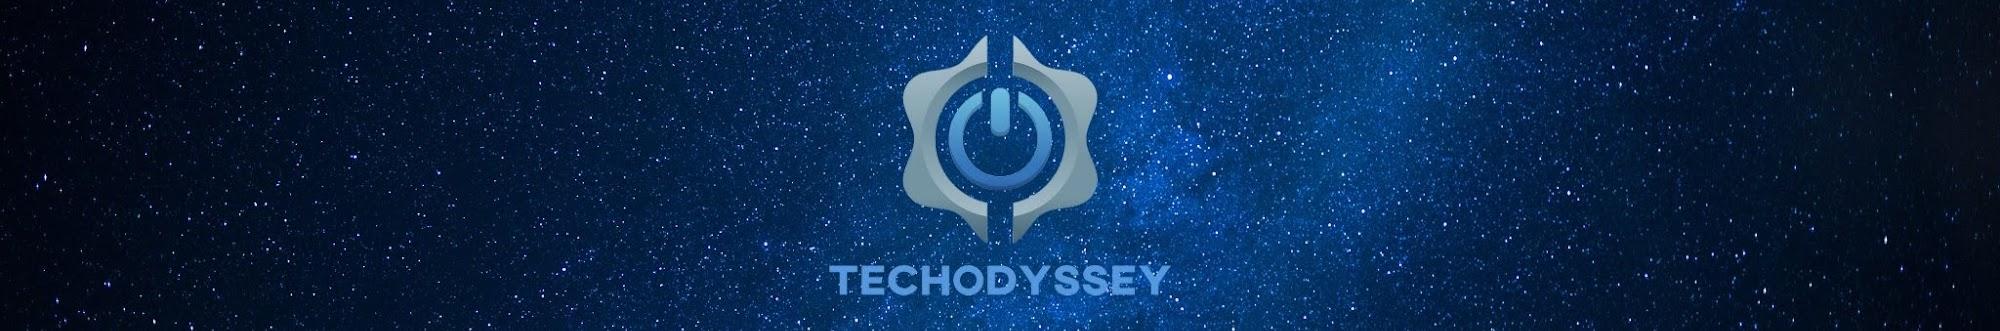 TechOdyssey